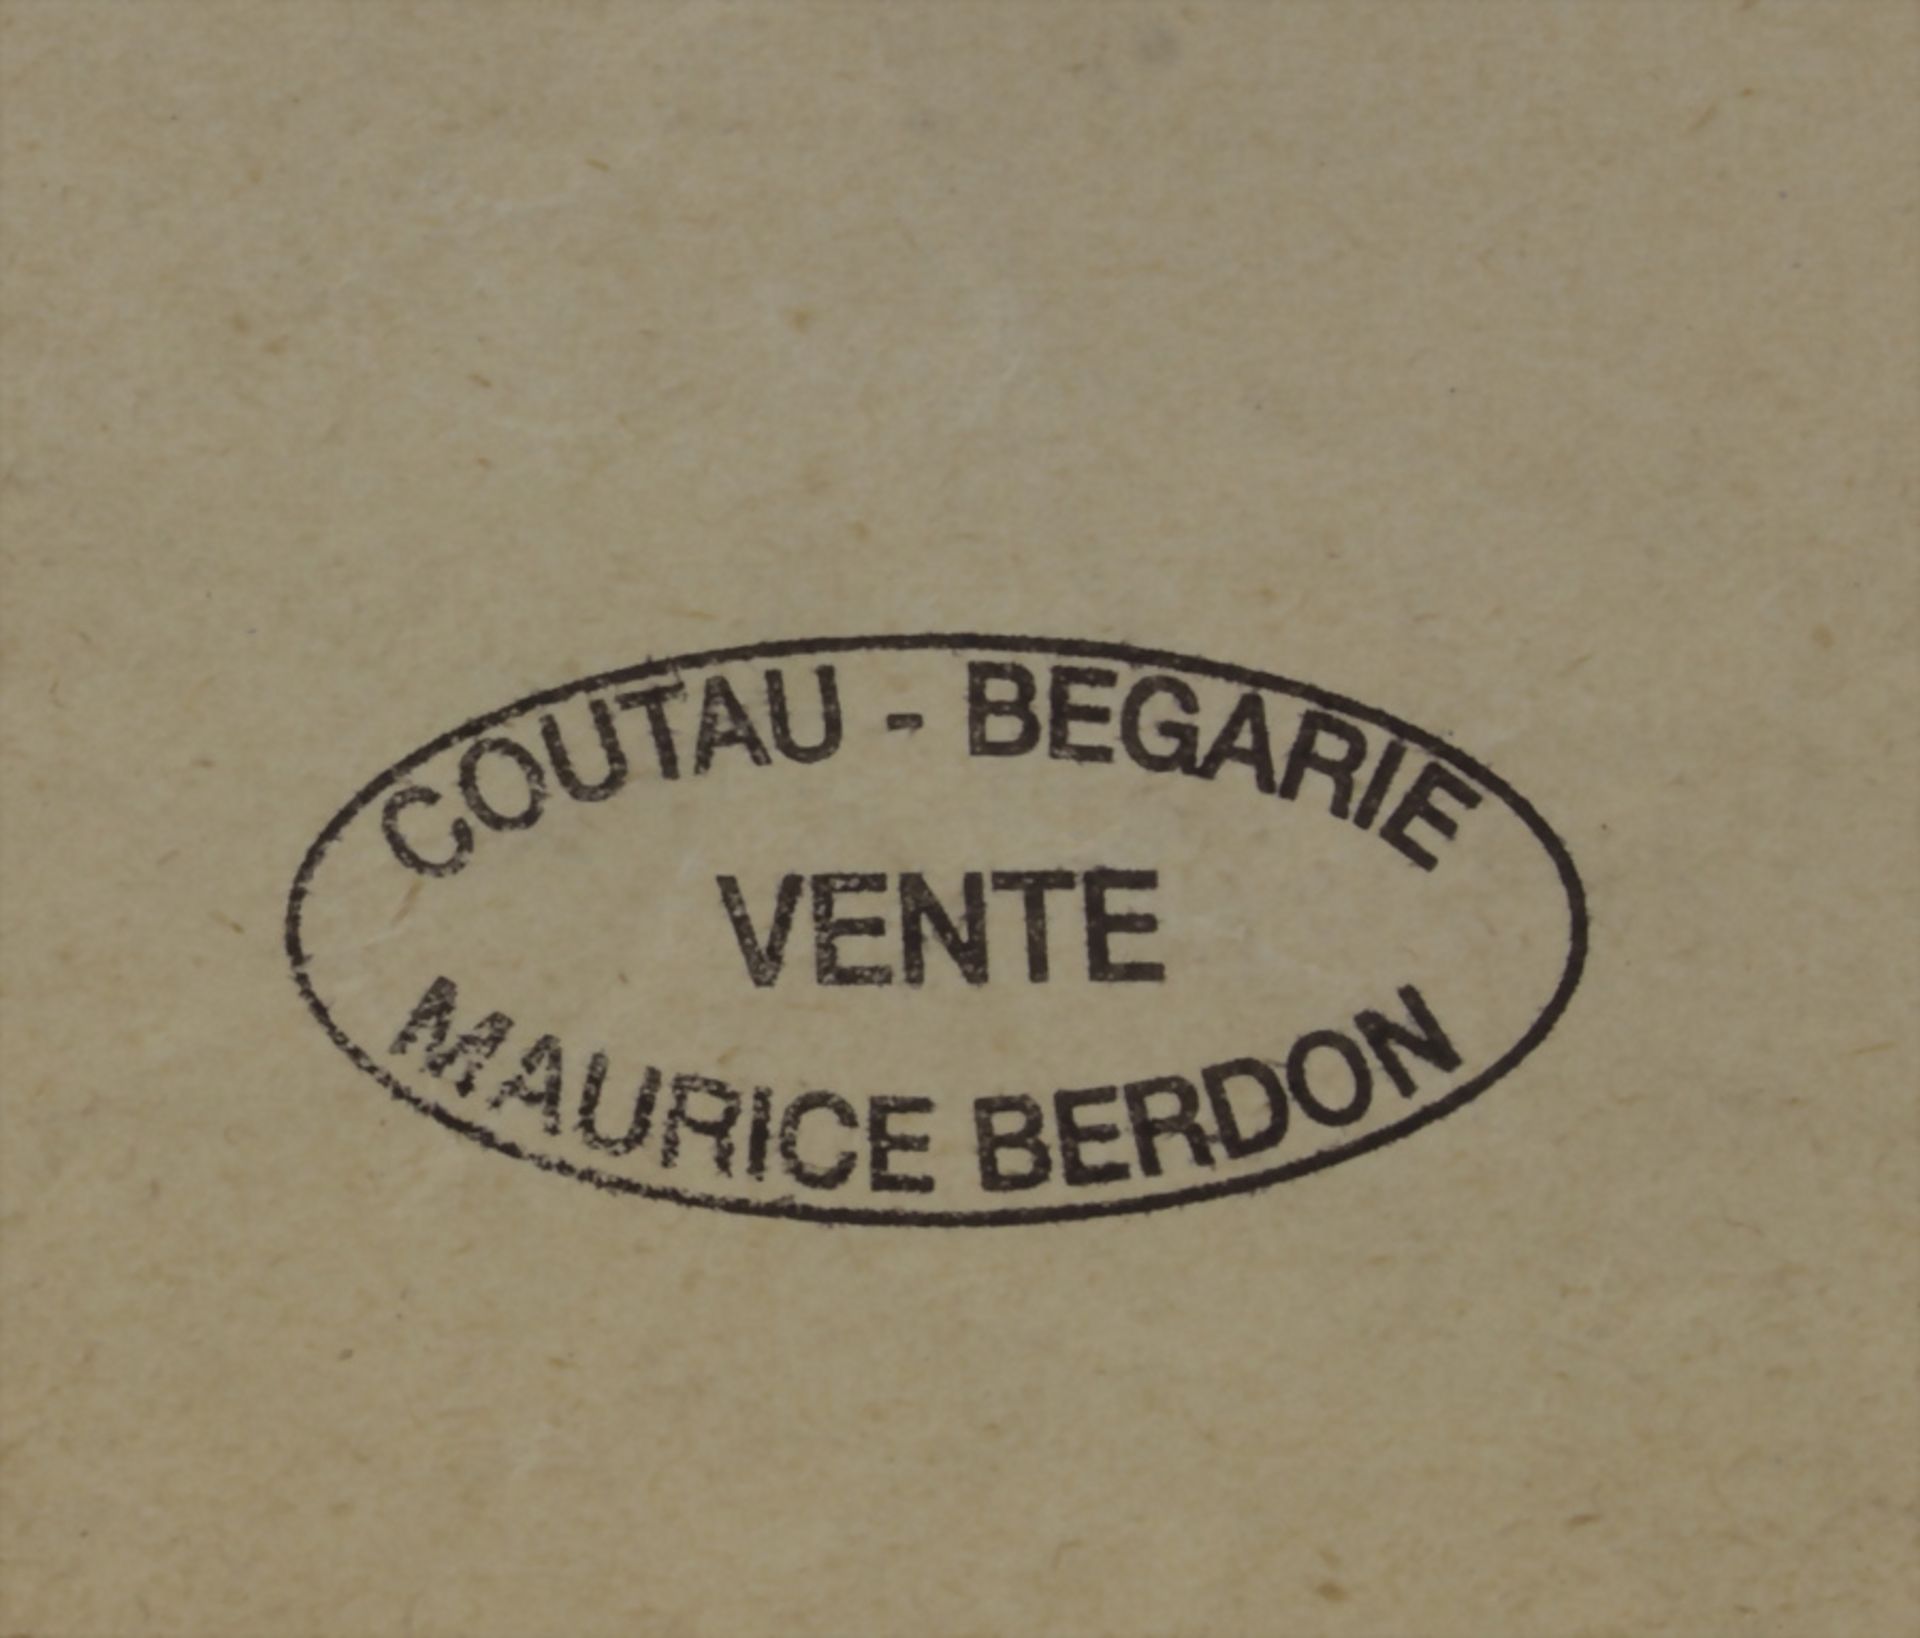 Maurice Berdon (20.Jh.), 'Sitzende Figuren' / 'Sitting figures', 20. Jh. - Image 3 of 5